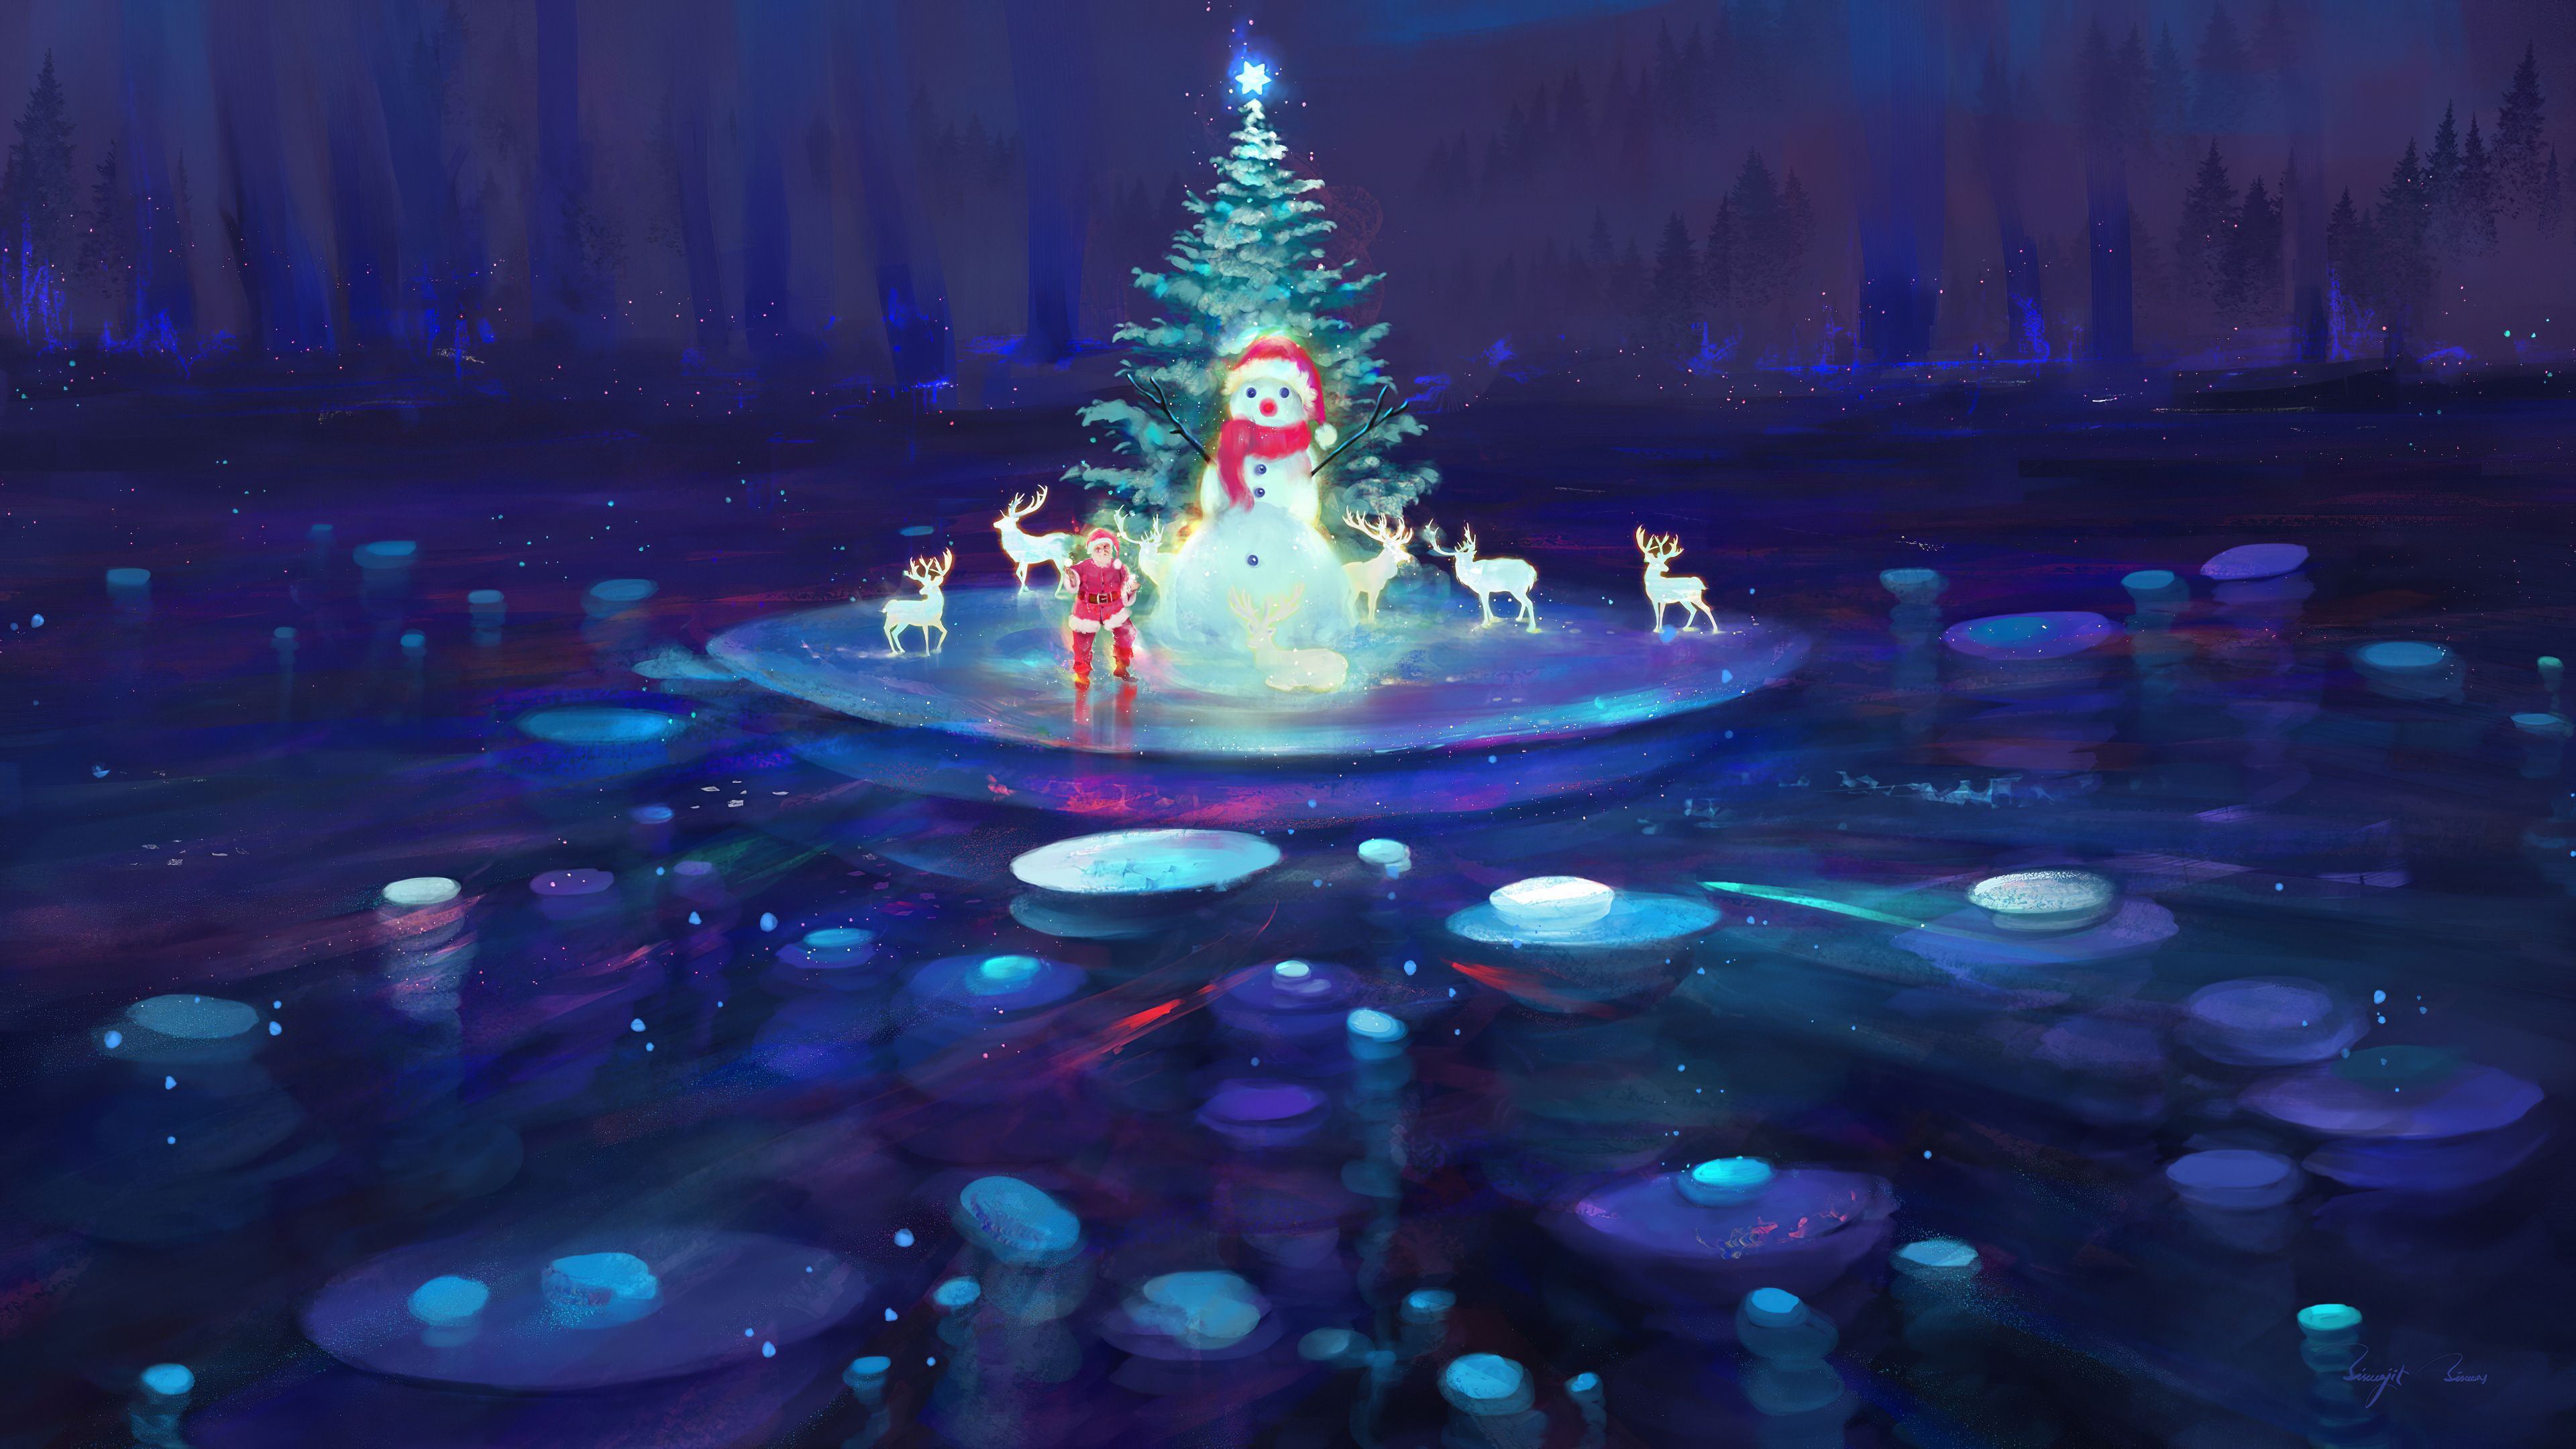 Reindeer Christmas Season Santa Colorful Digital Art 4k, HD Artist, 4k Wallpaper, Image, Background, Photo and Picture